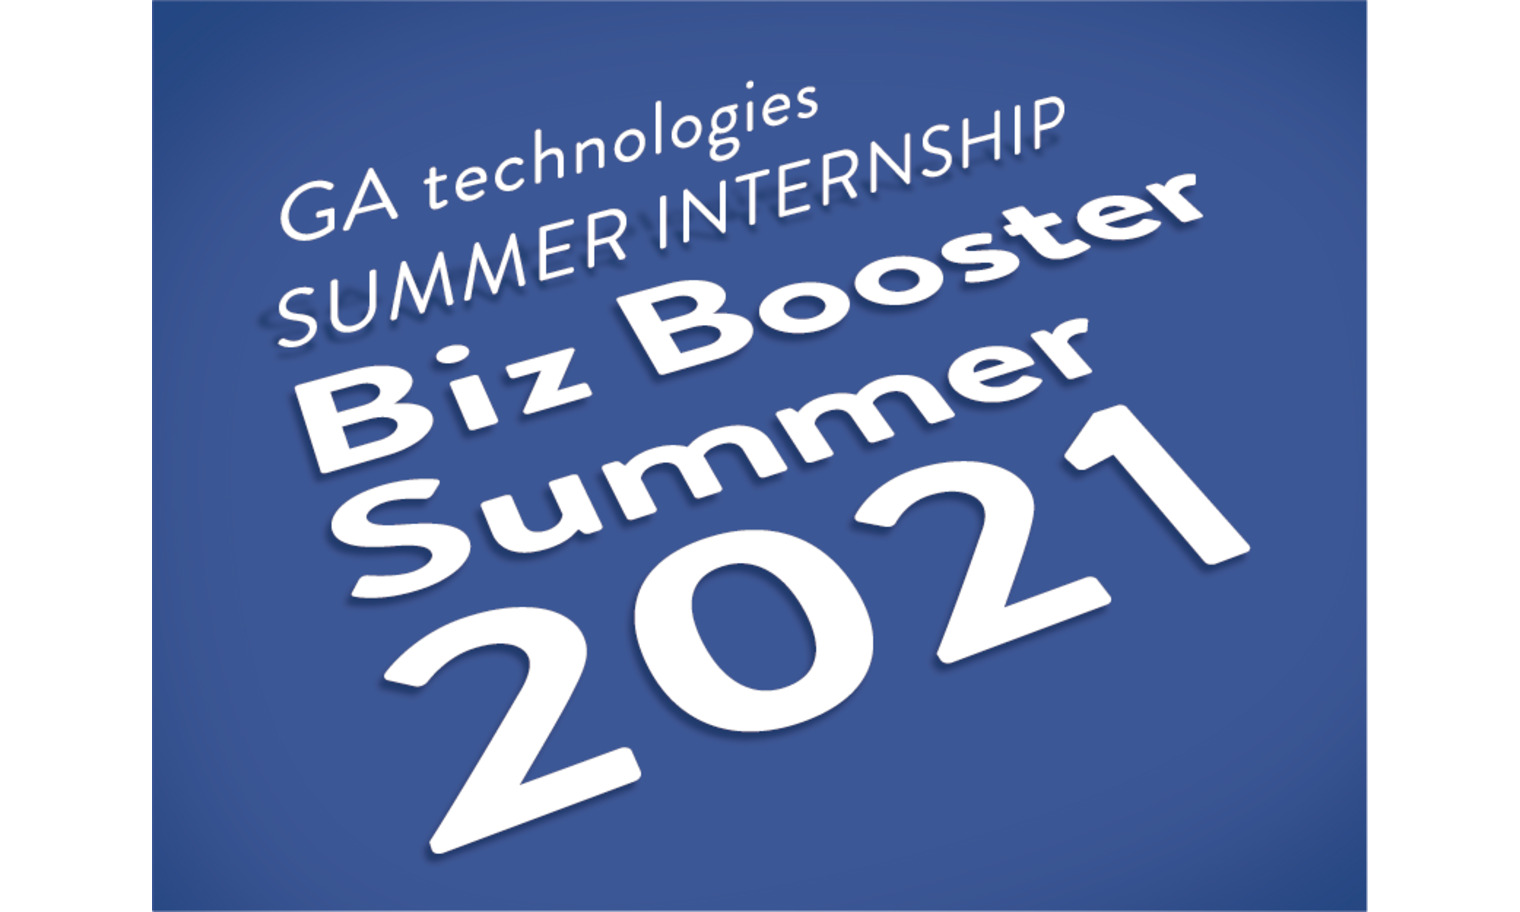 GA technologies SUMMER INTERNSHIP Booster Summer 2021』 ニュース